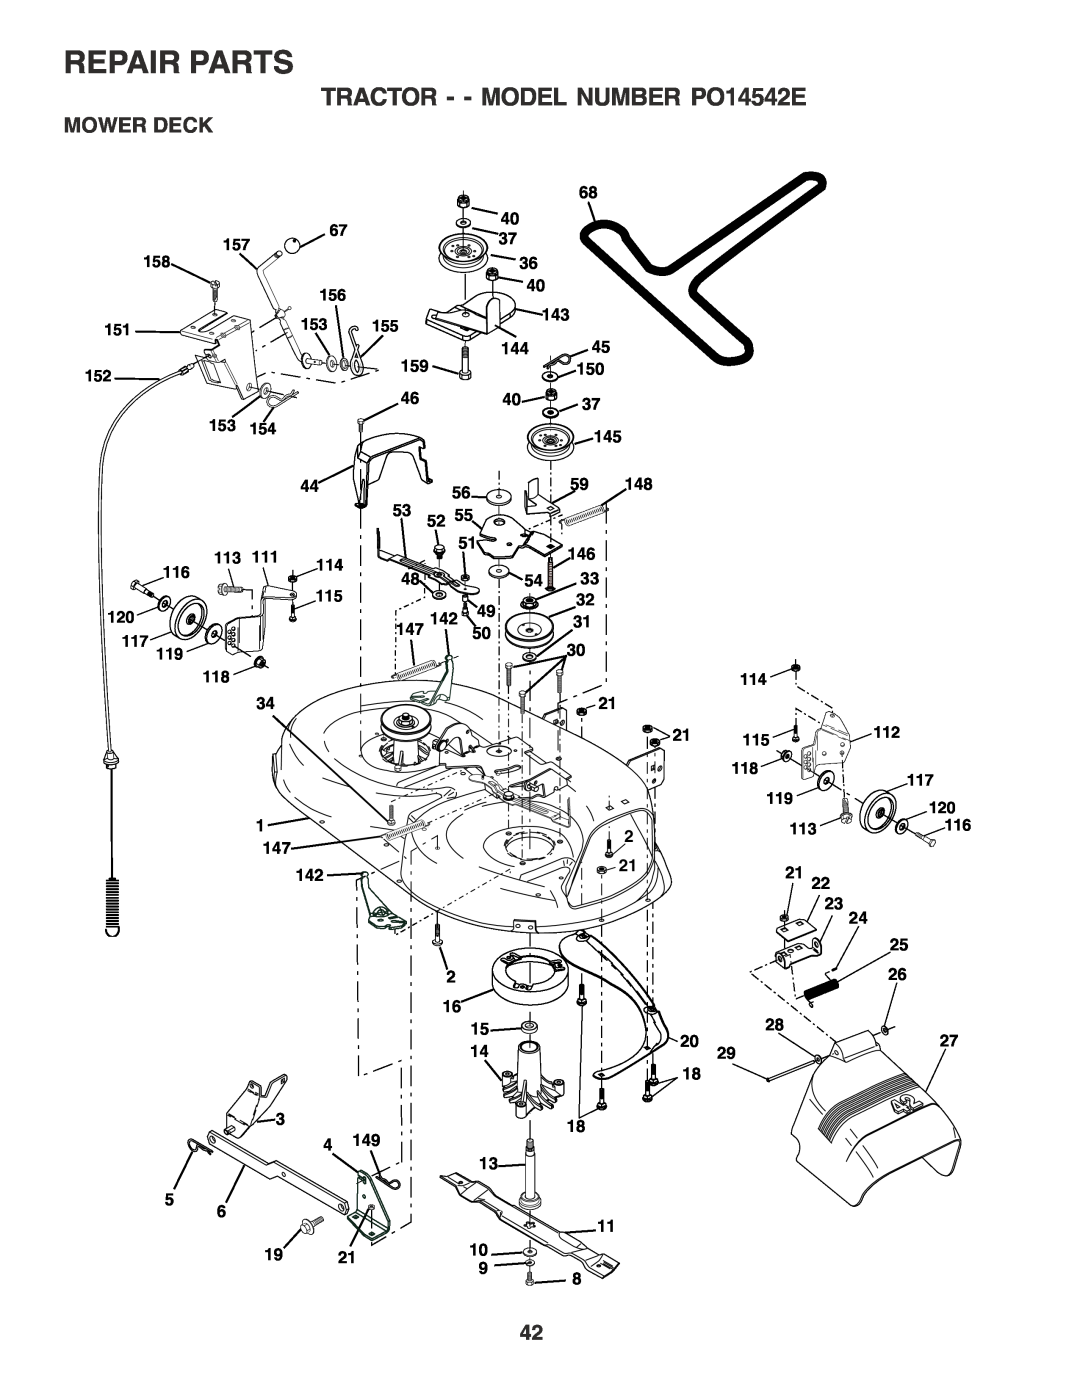 Poulan manual Mower Deck, Repair Parts, TRACTOR - - MODEL NUMBER PO14542E 